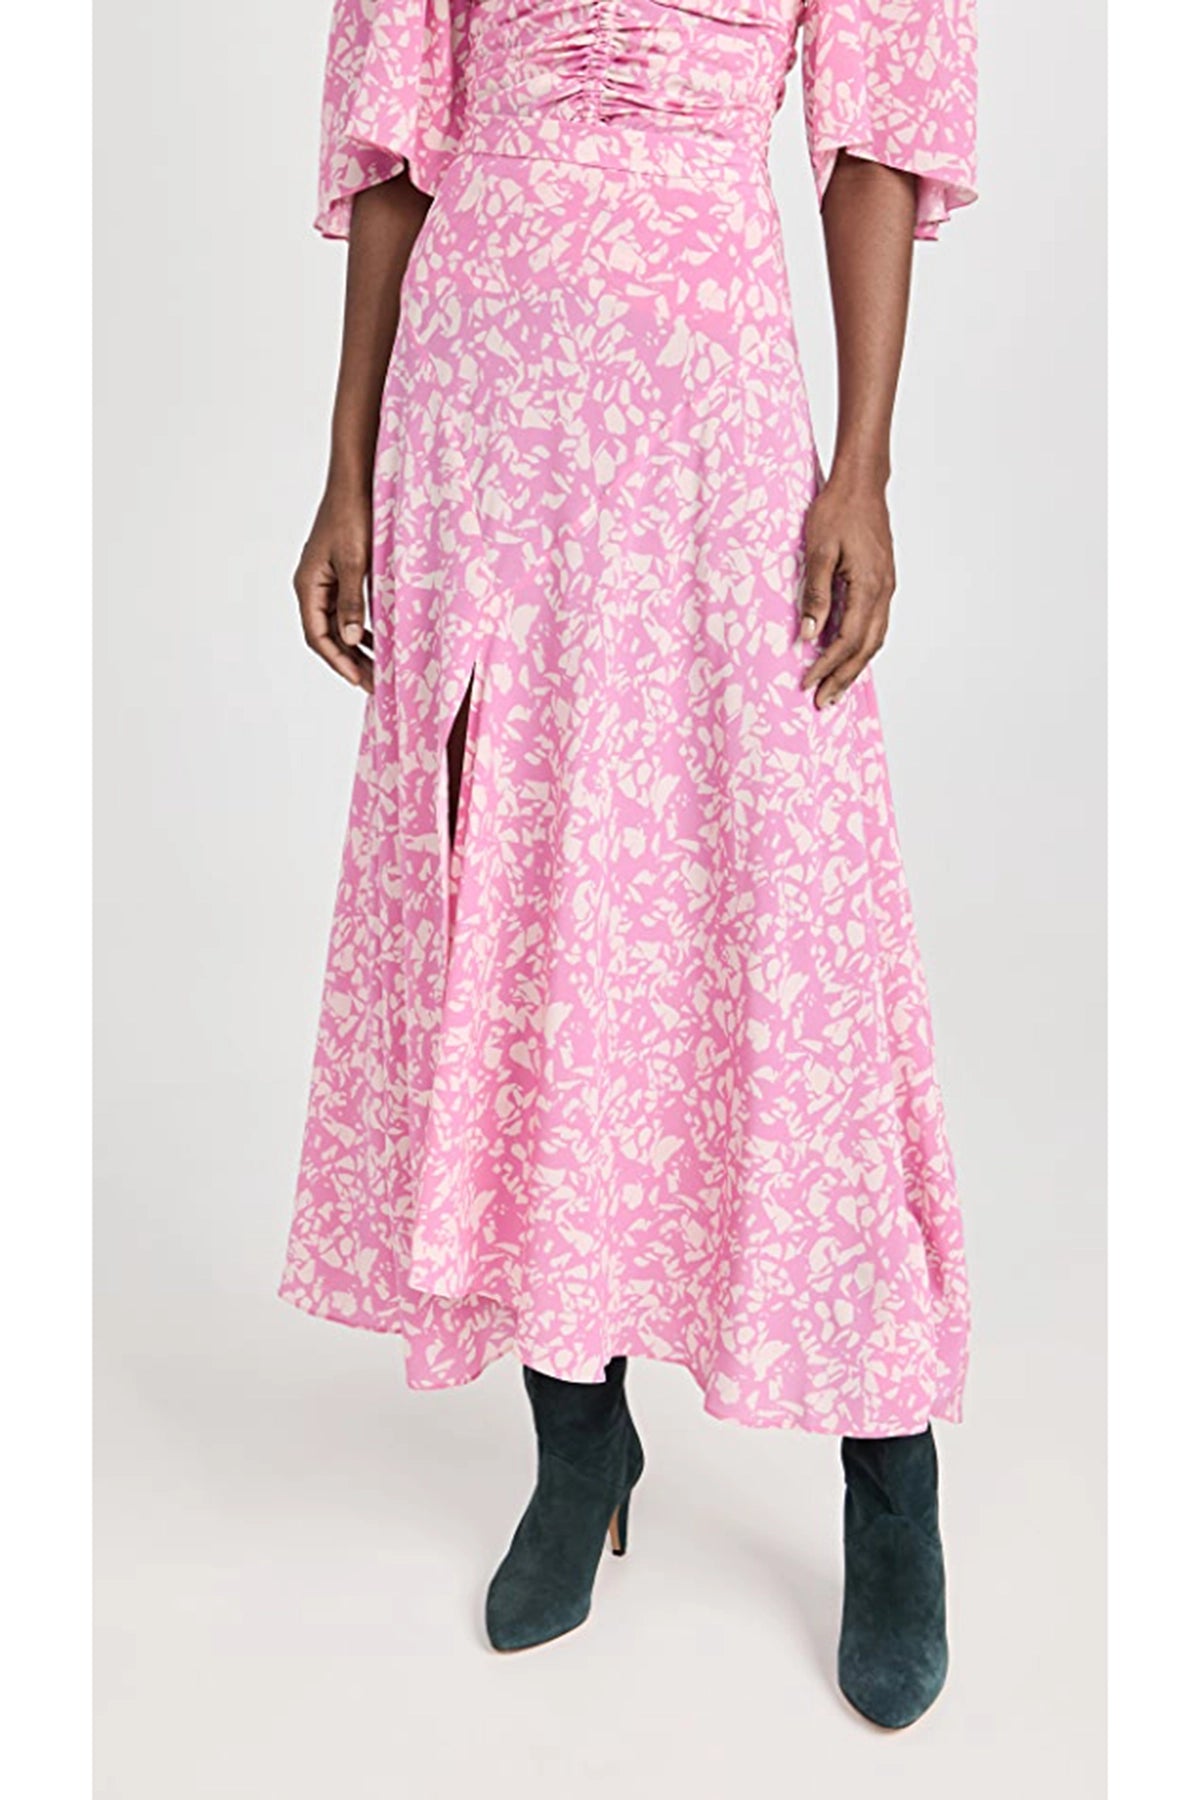 Isabel Marant Sakura Midi Skirt